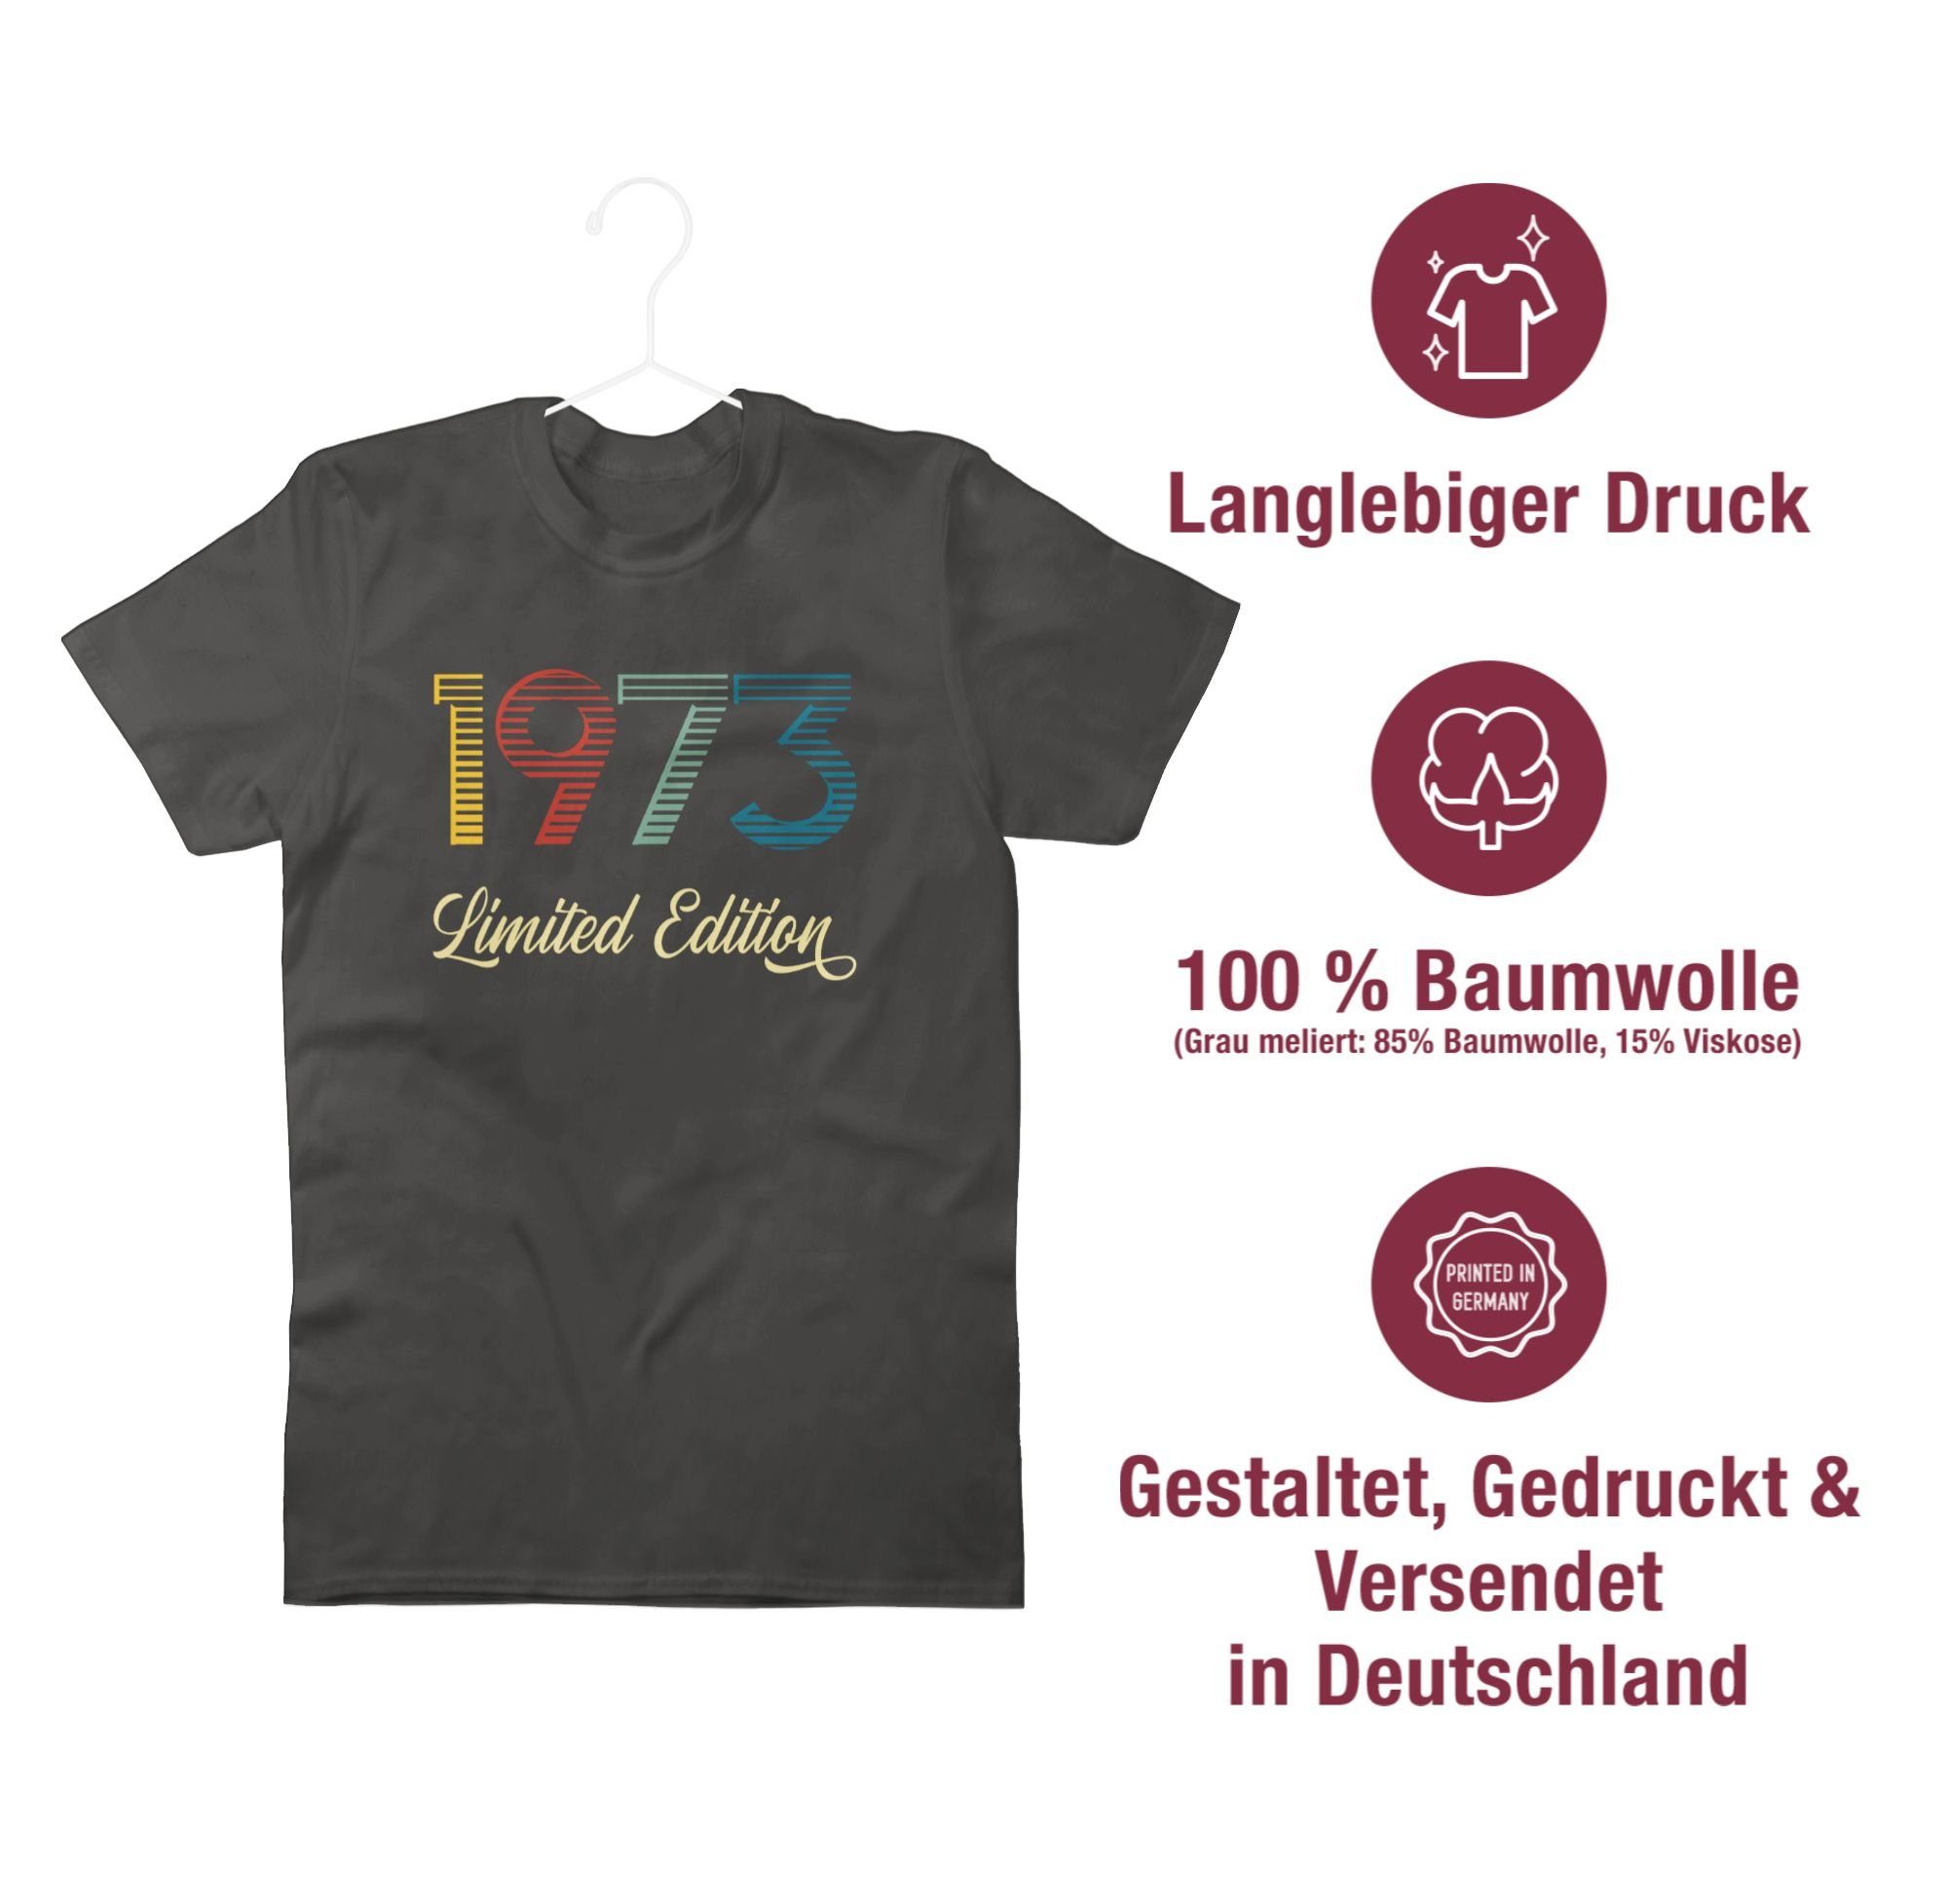 1 50. Edition Limited Shirtracer Dunkelgrau T-Shirt Geburtstag 1973